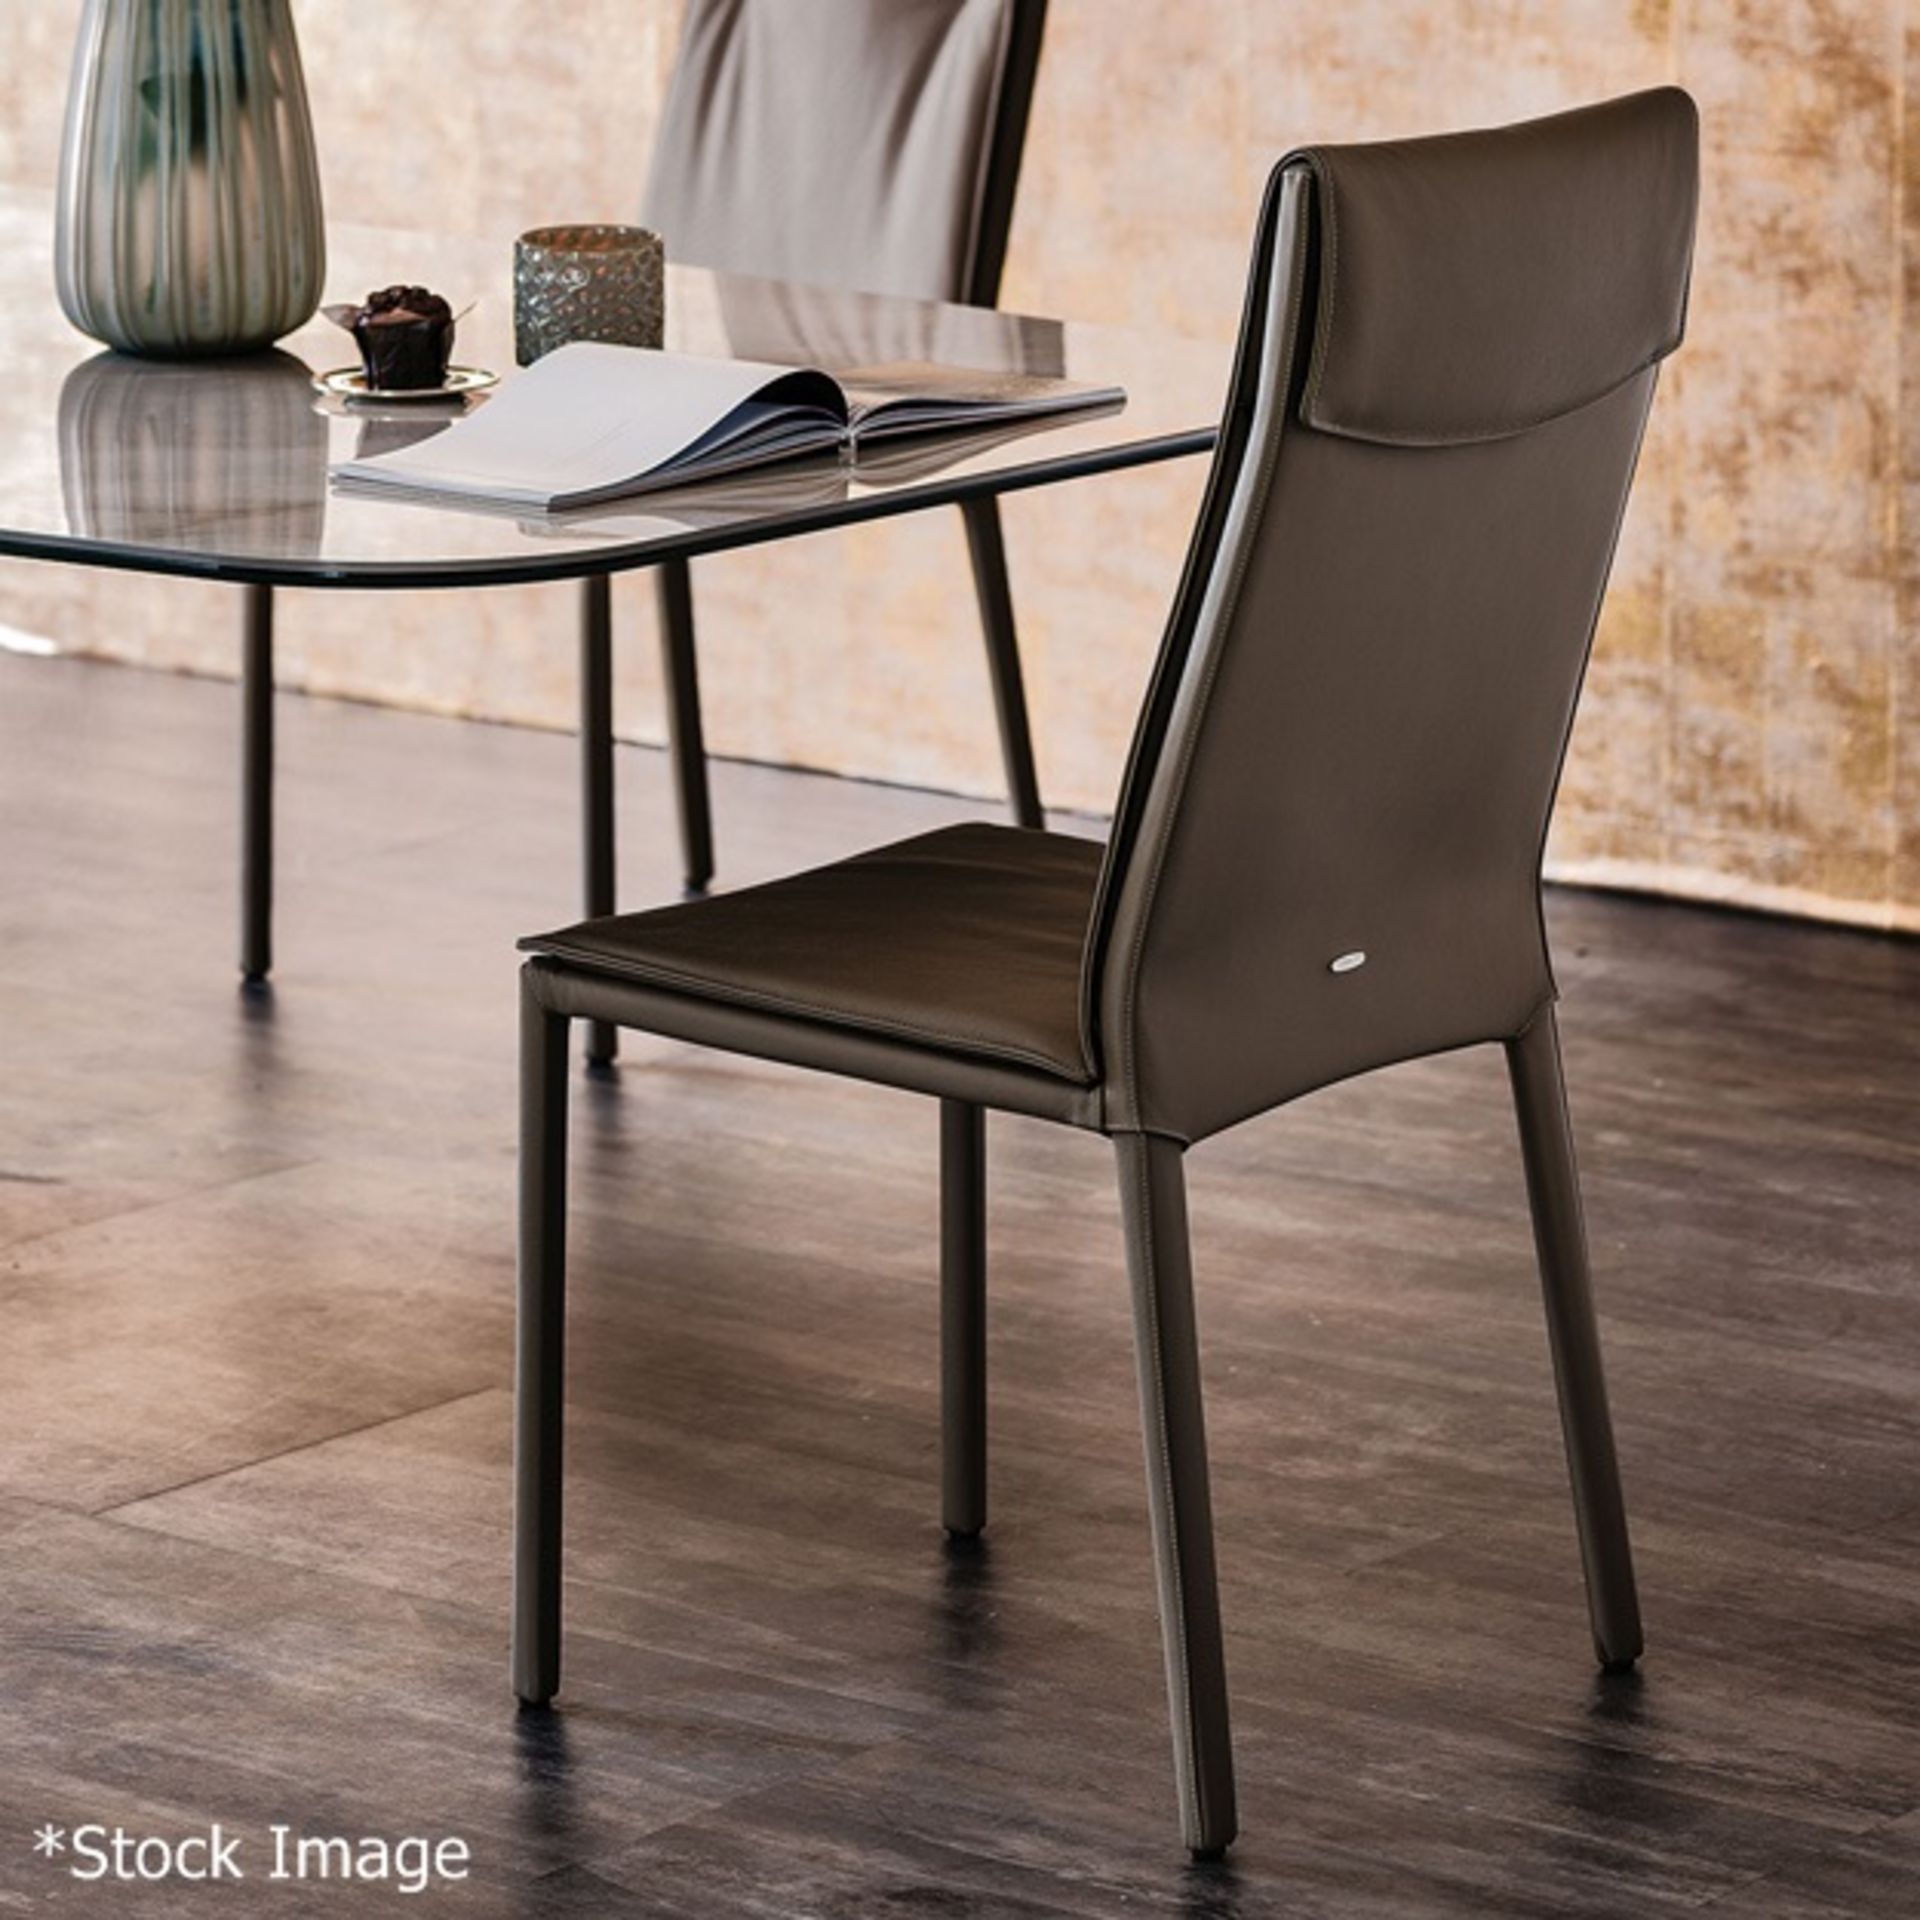 6 x CATTELAN 'Isabel' Italian Designer Leather Upholstered Dining Chairs - Original Price £3,864